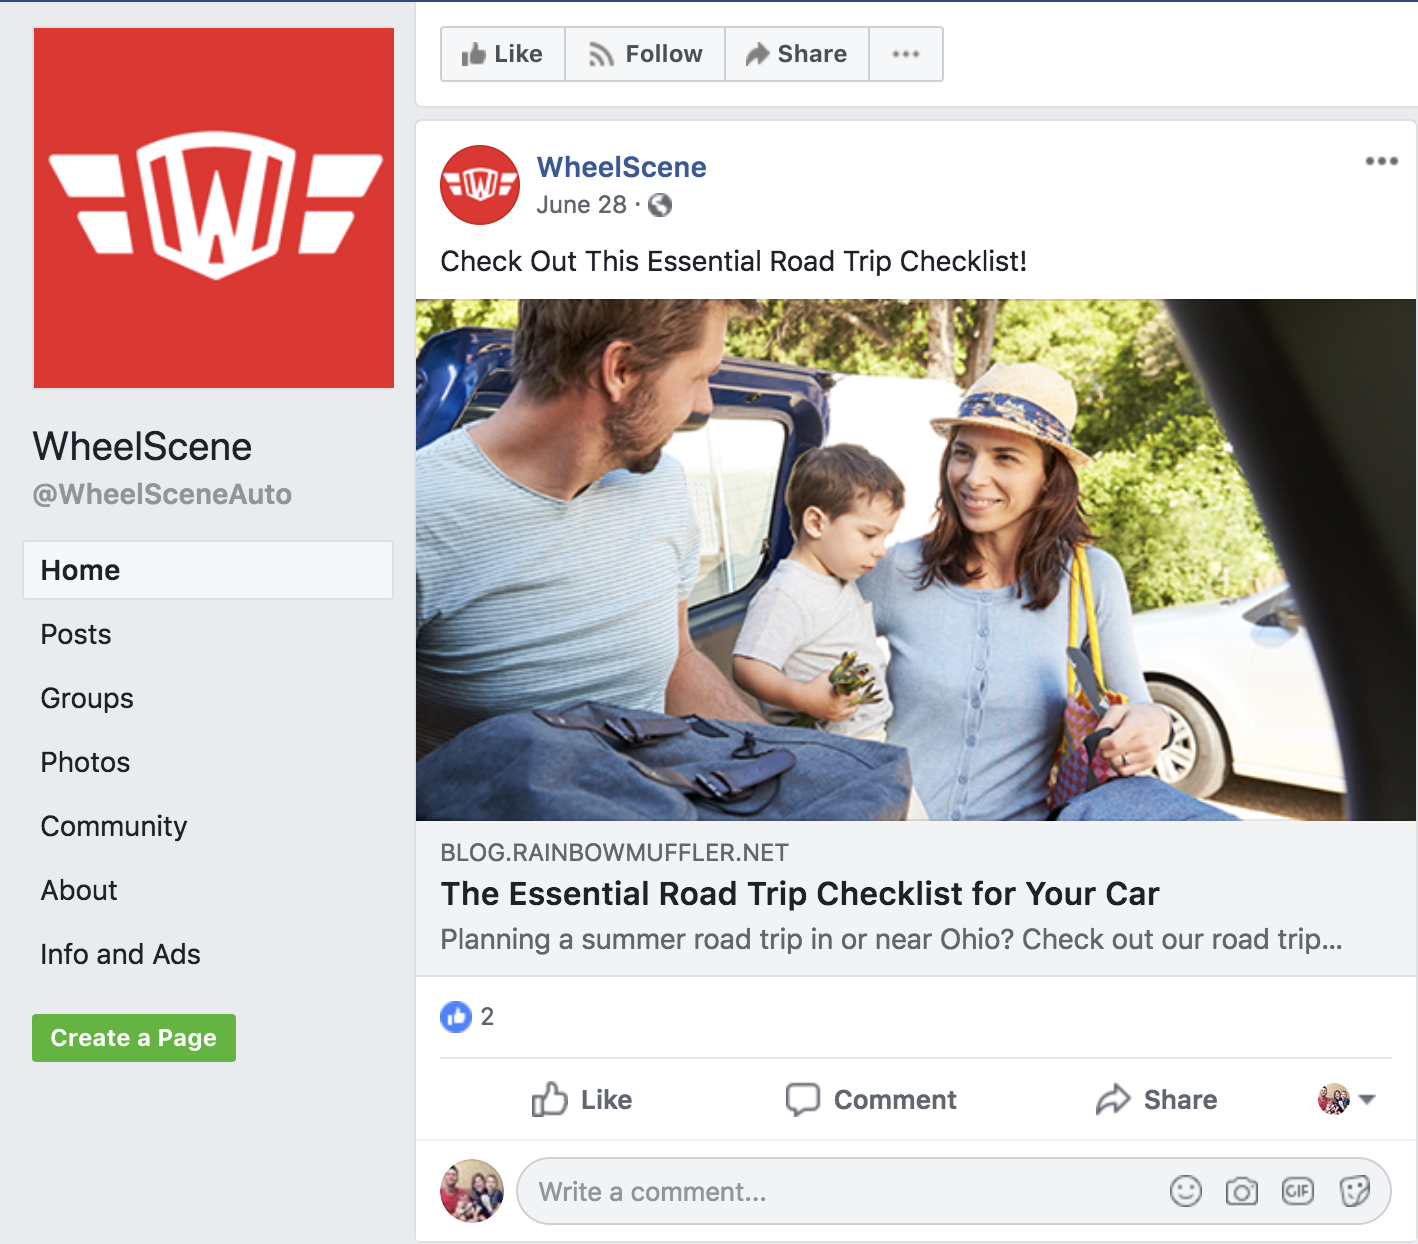  wheelscene facebook content promotion